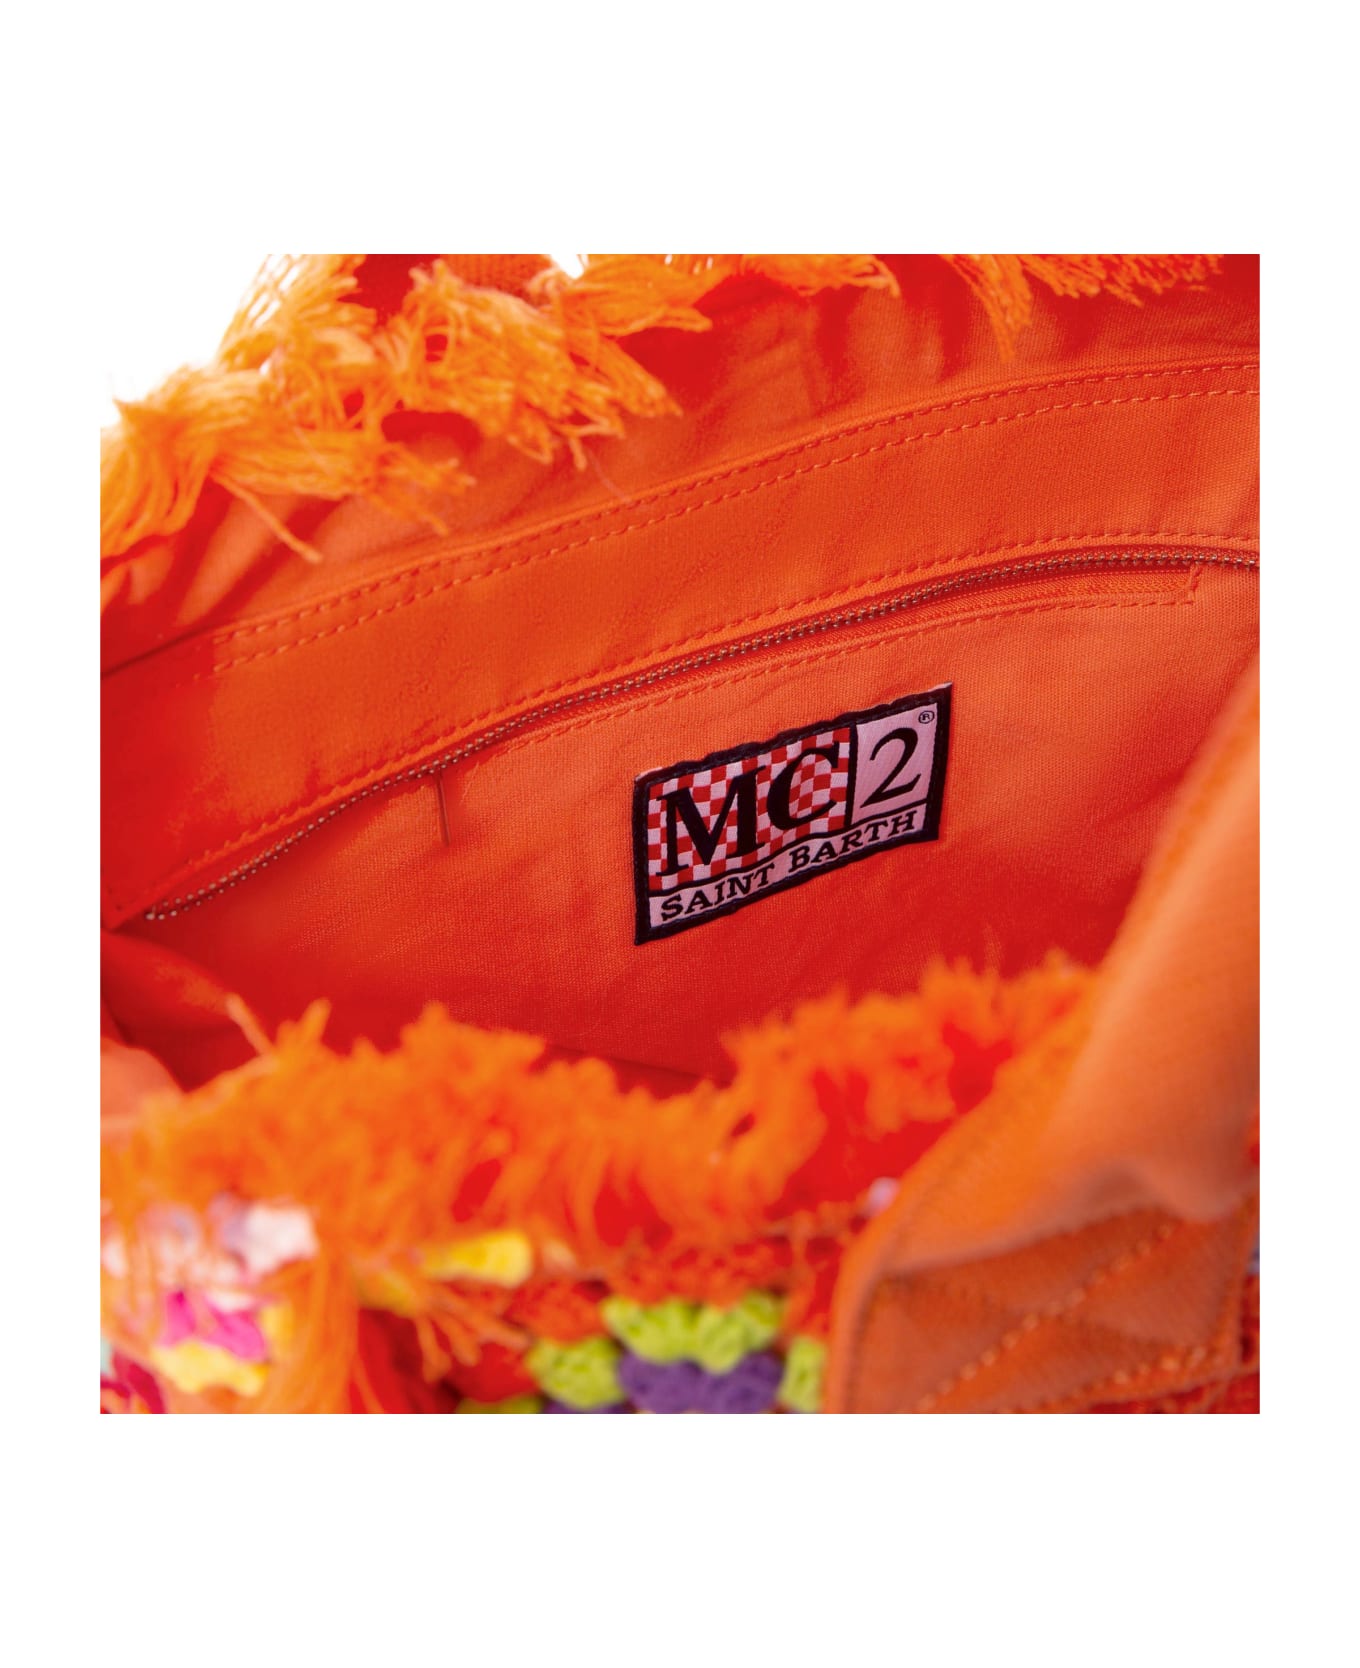 MC2 Saint Barth Vanity Crochet Shoulder Bag With Pattern - ORANGE トートバッグ